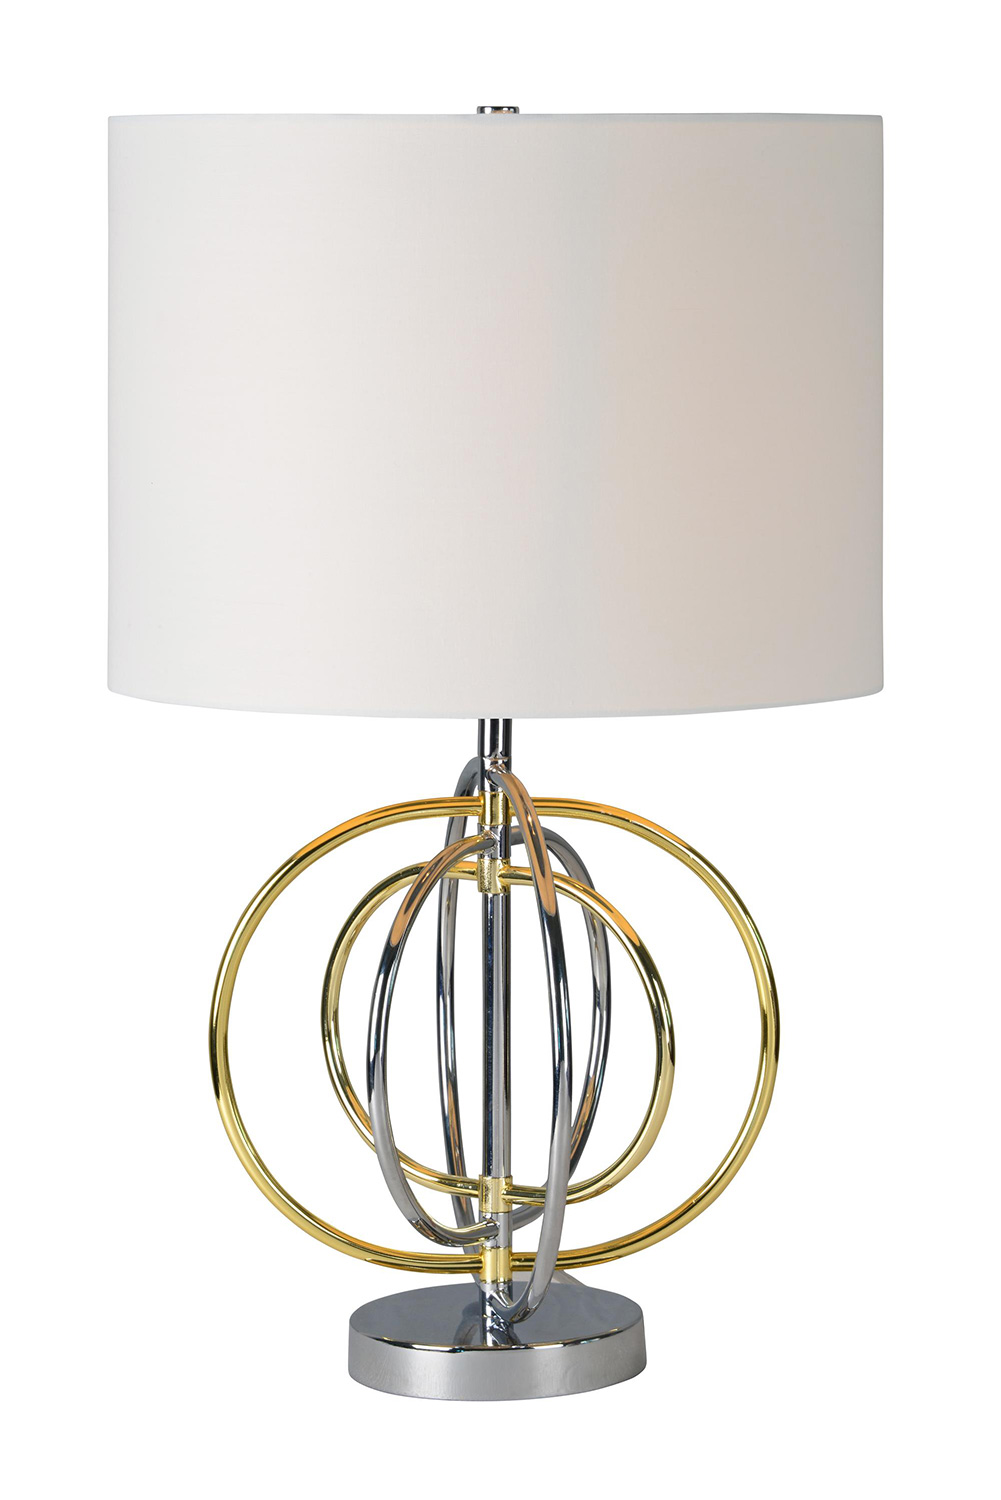 Ren-Wil Homespun Table Lamp - Chrome/Polished Brass